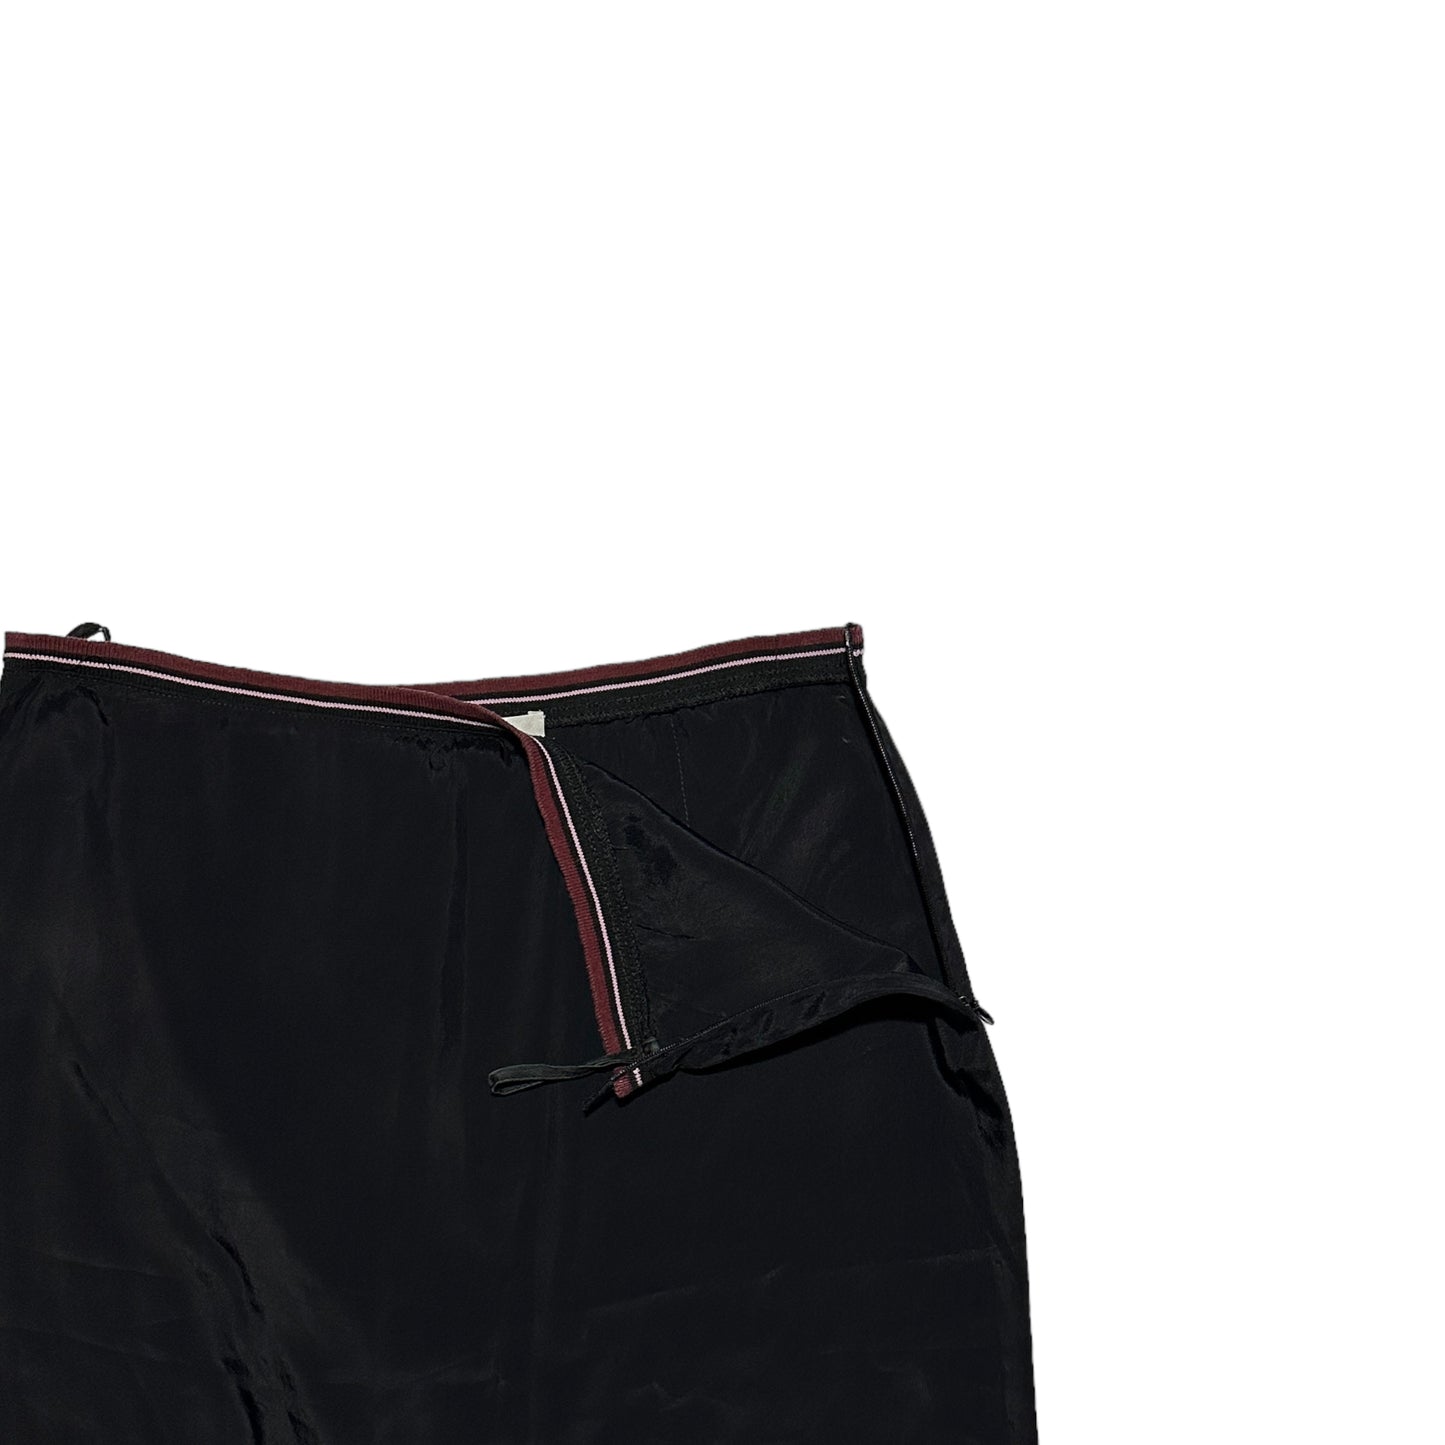 S/S 2000 Miu Miu Knee Skirt (38)